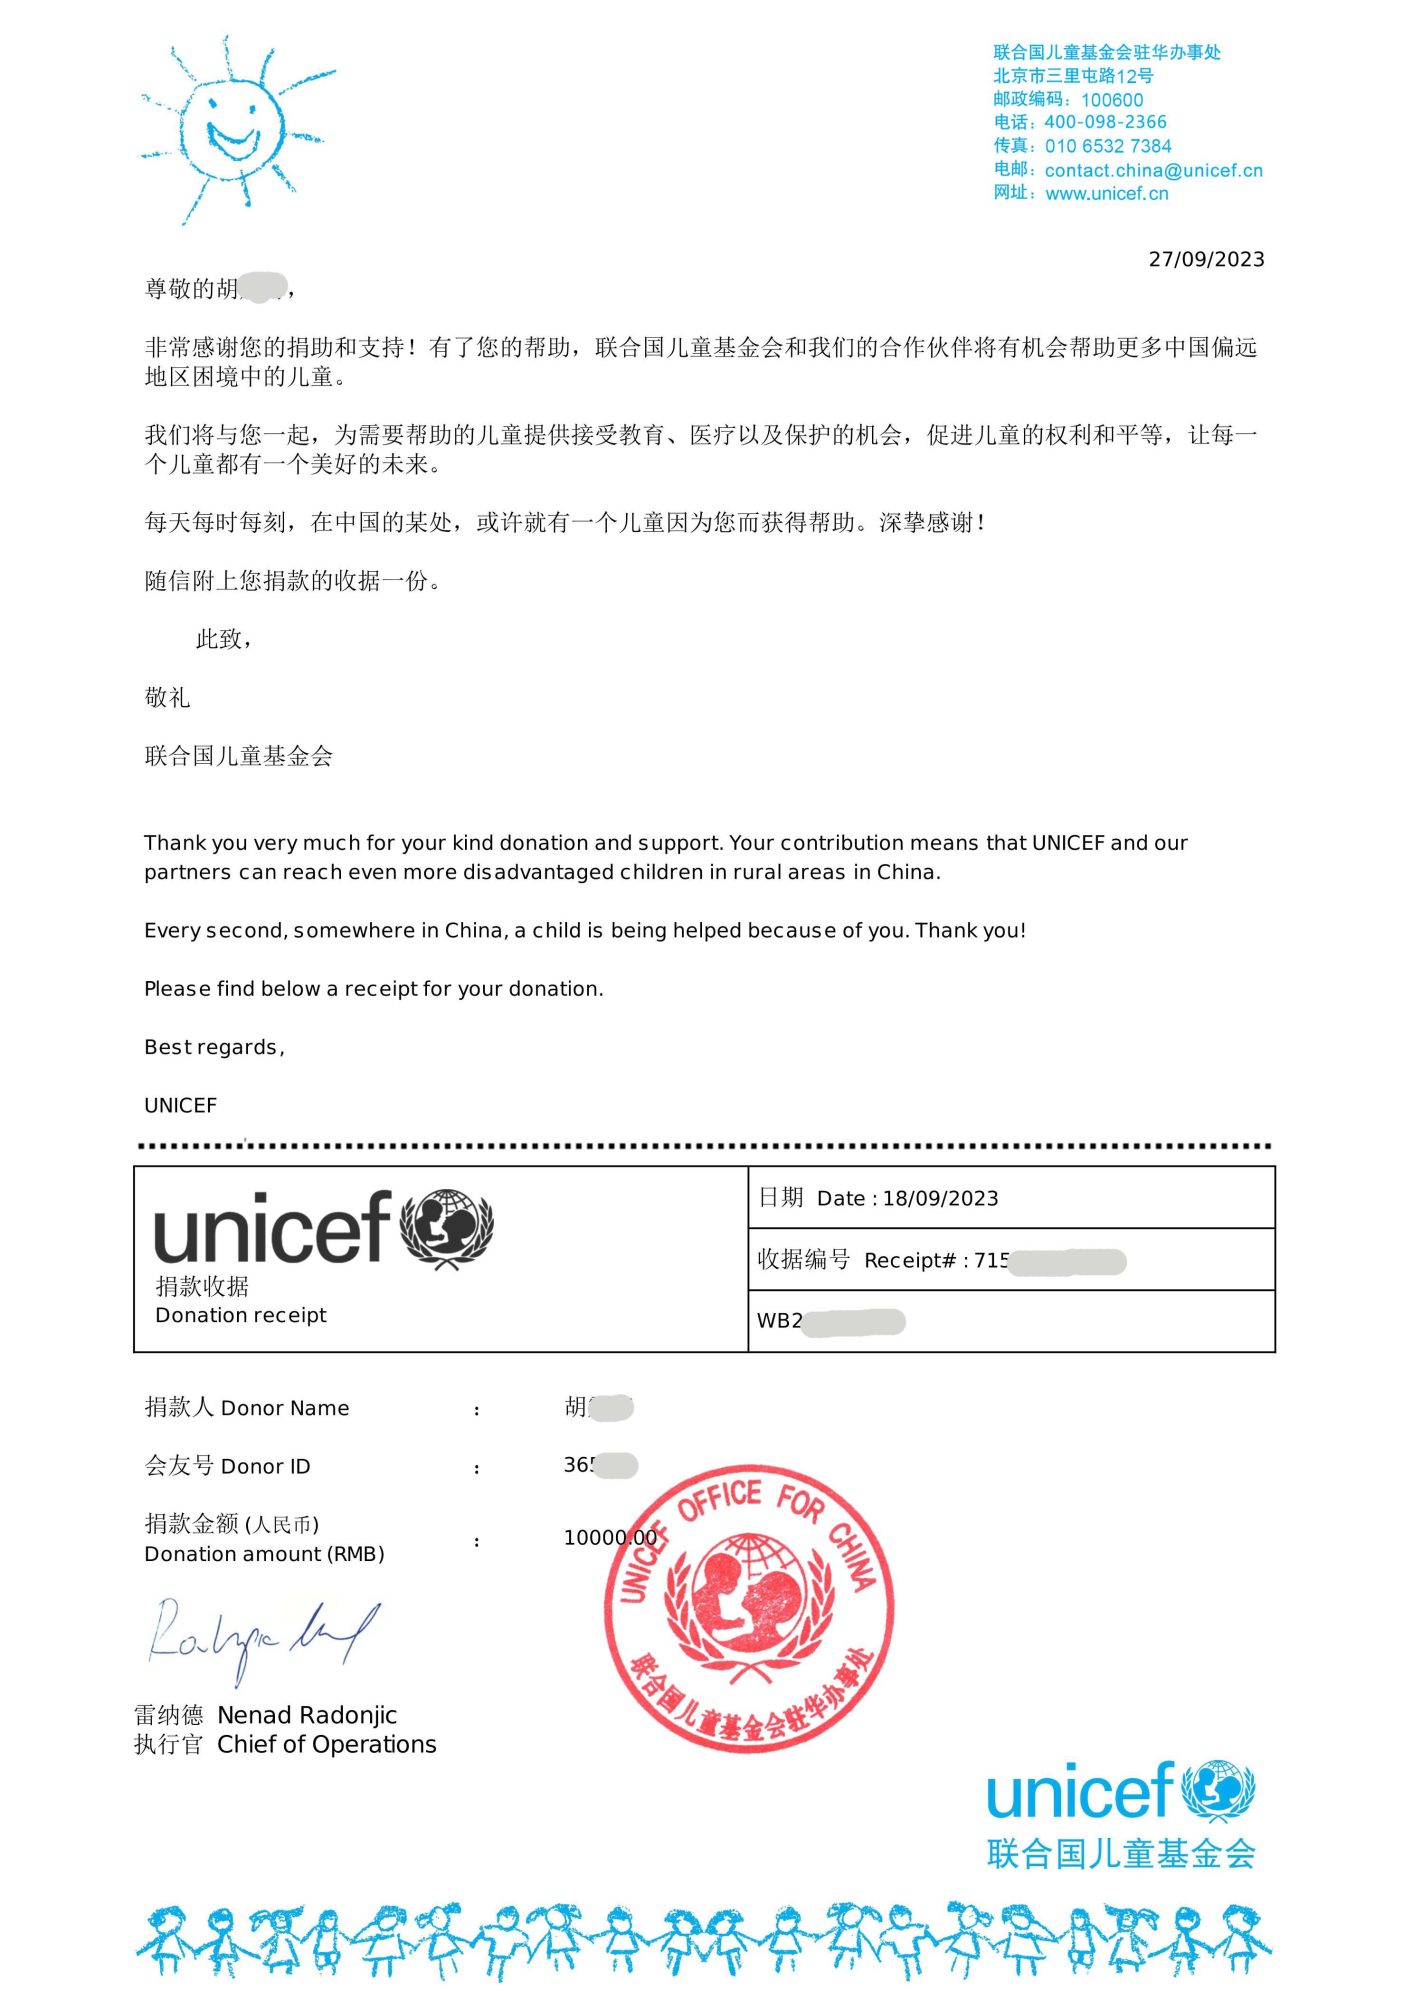 Unicef Donation receipt1 scaled